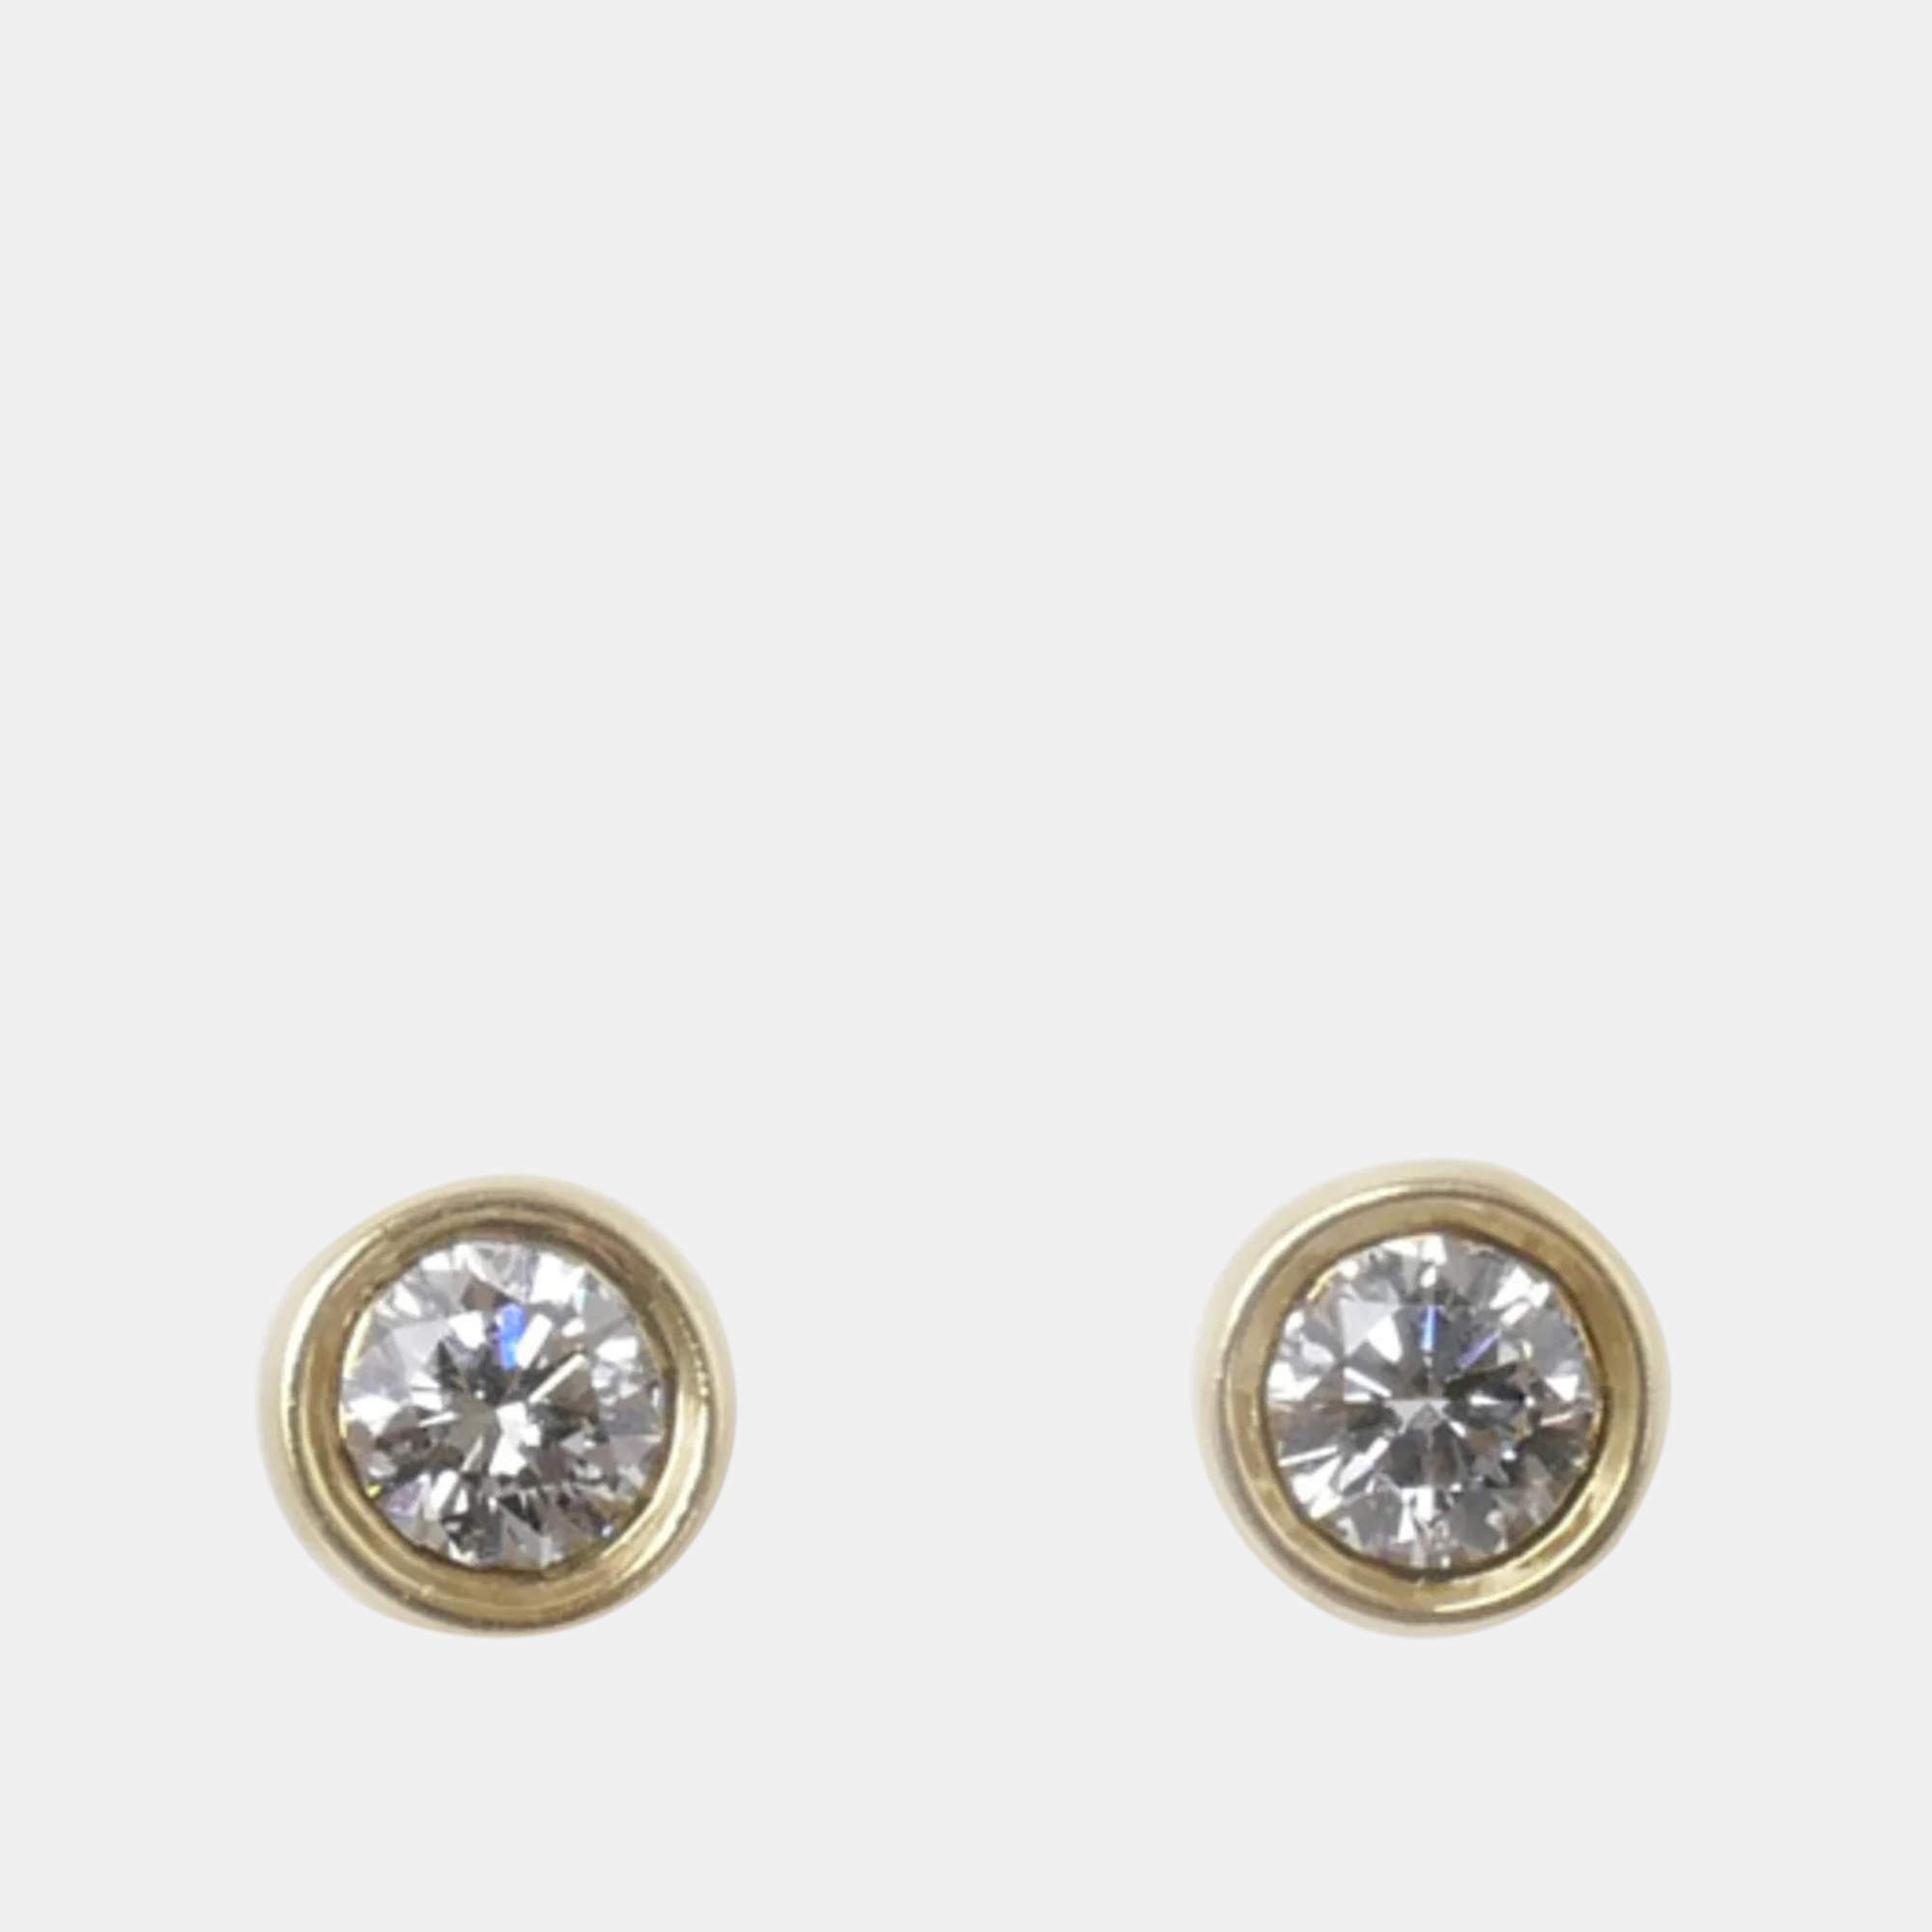 Elsa Peretti™ Diamonds by the Yard™ Earrings in Yellow Gold